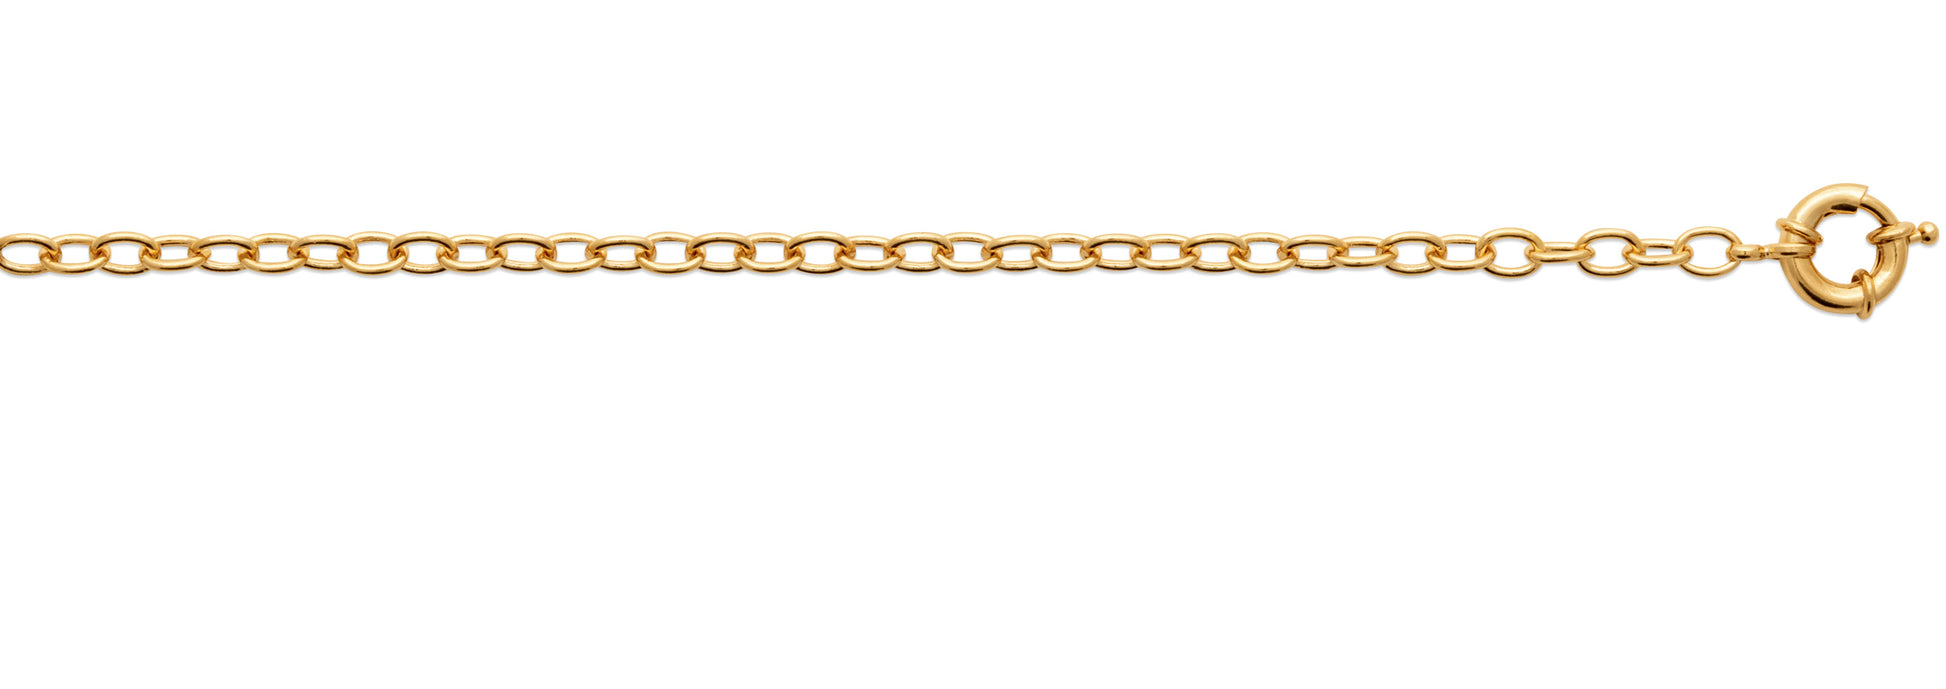 Armband mit Federring Sailor - 18K vergoldet